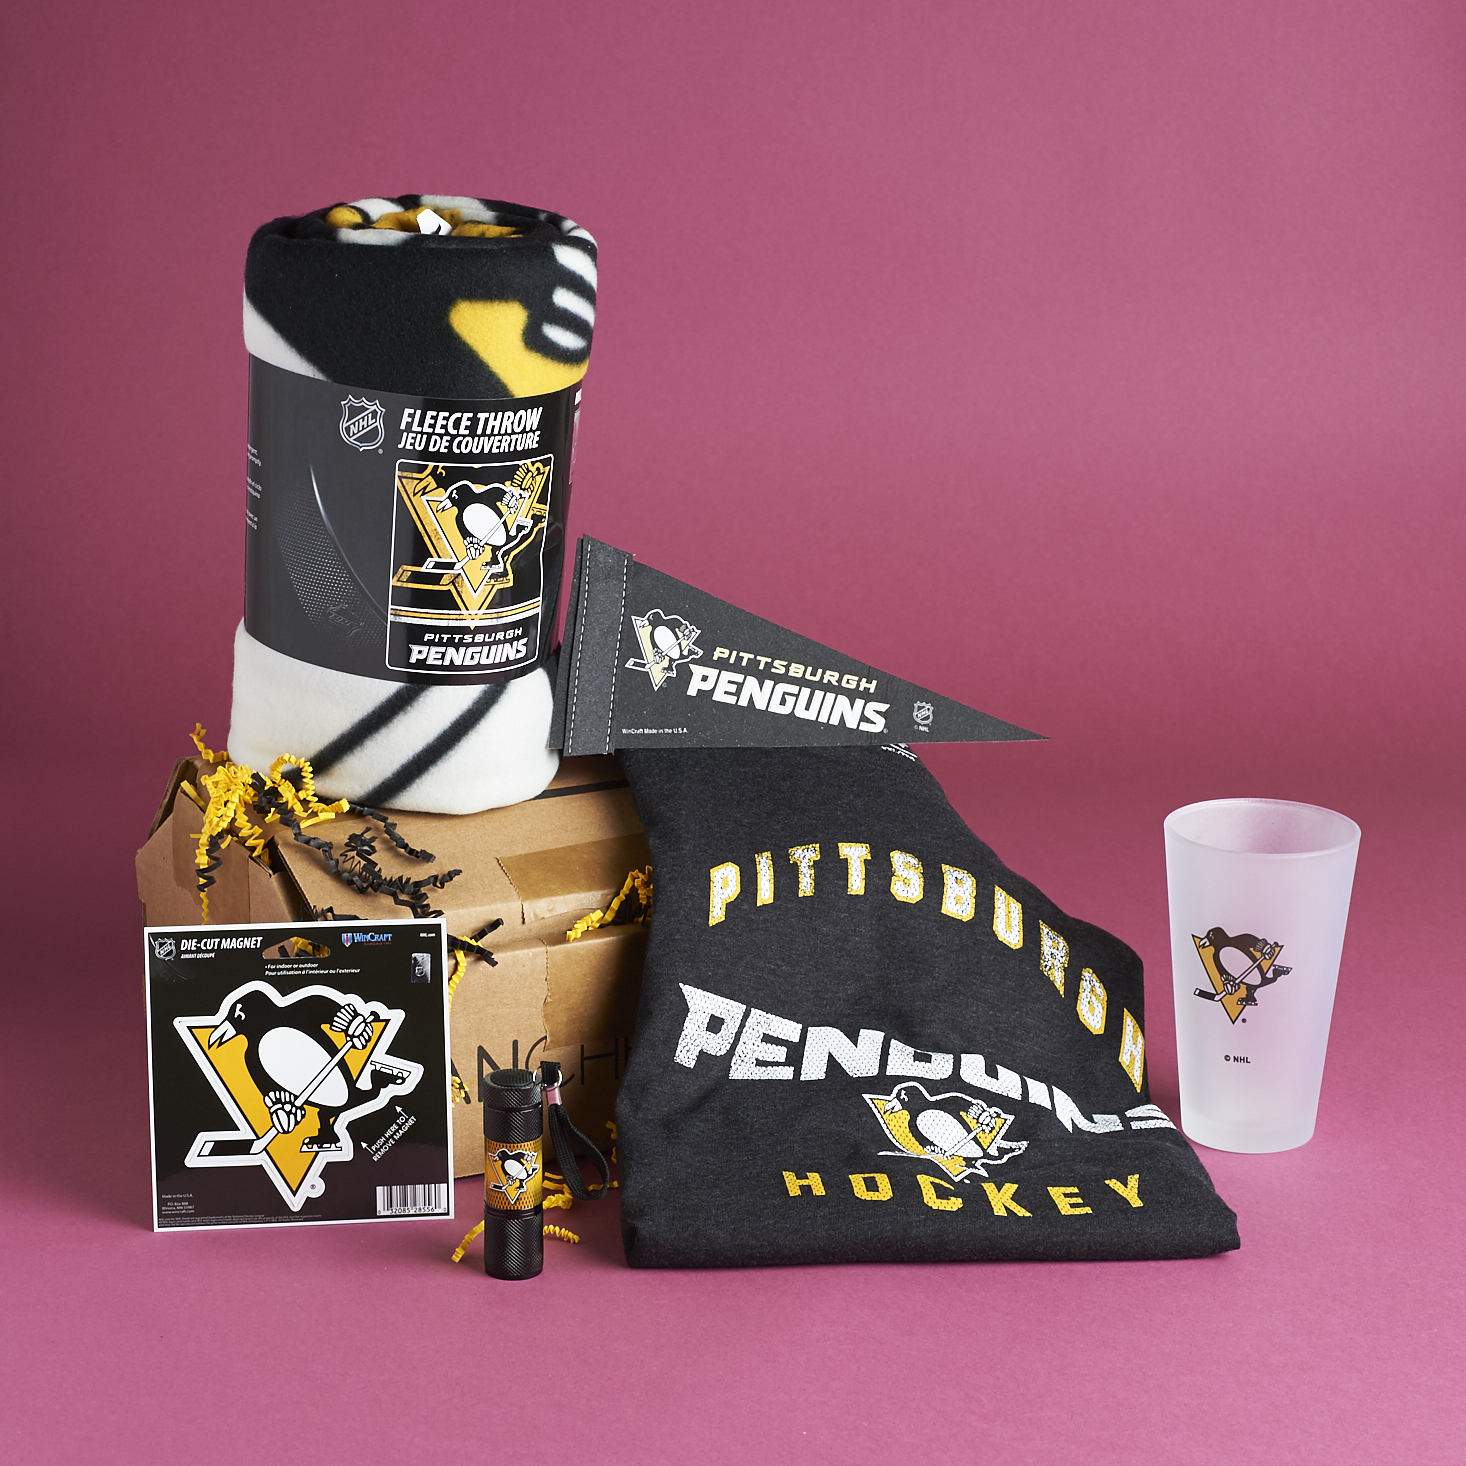 Pittsburgh Penguins Fanchest Box Review + Coupon – April 2017